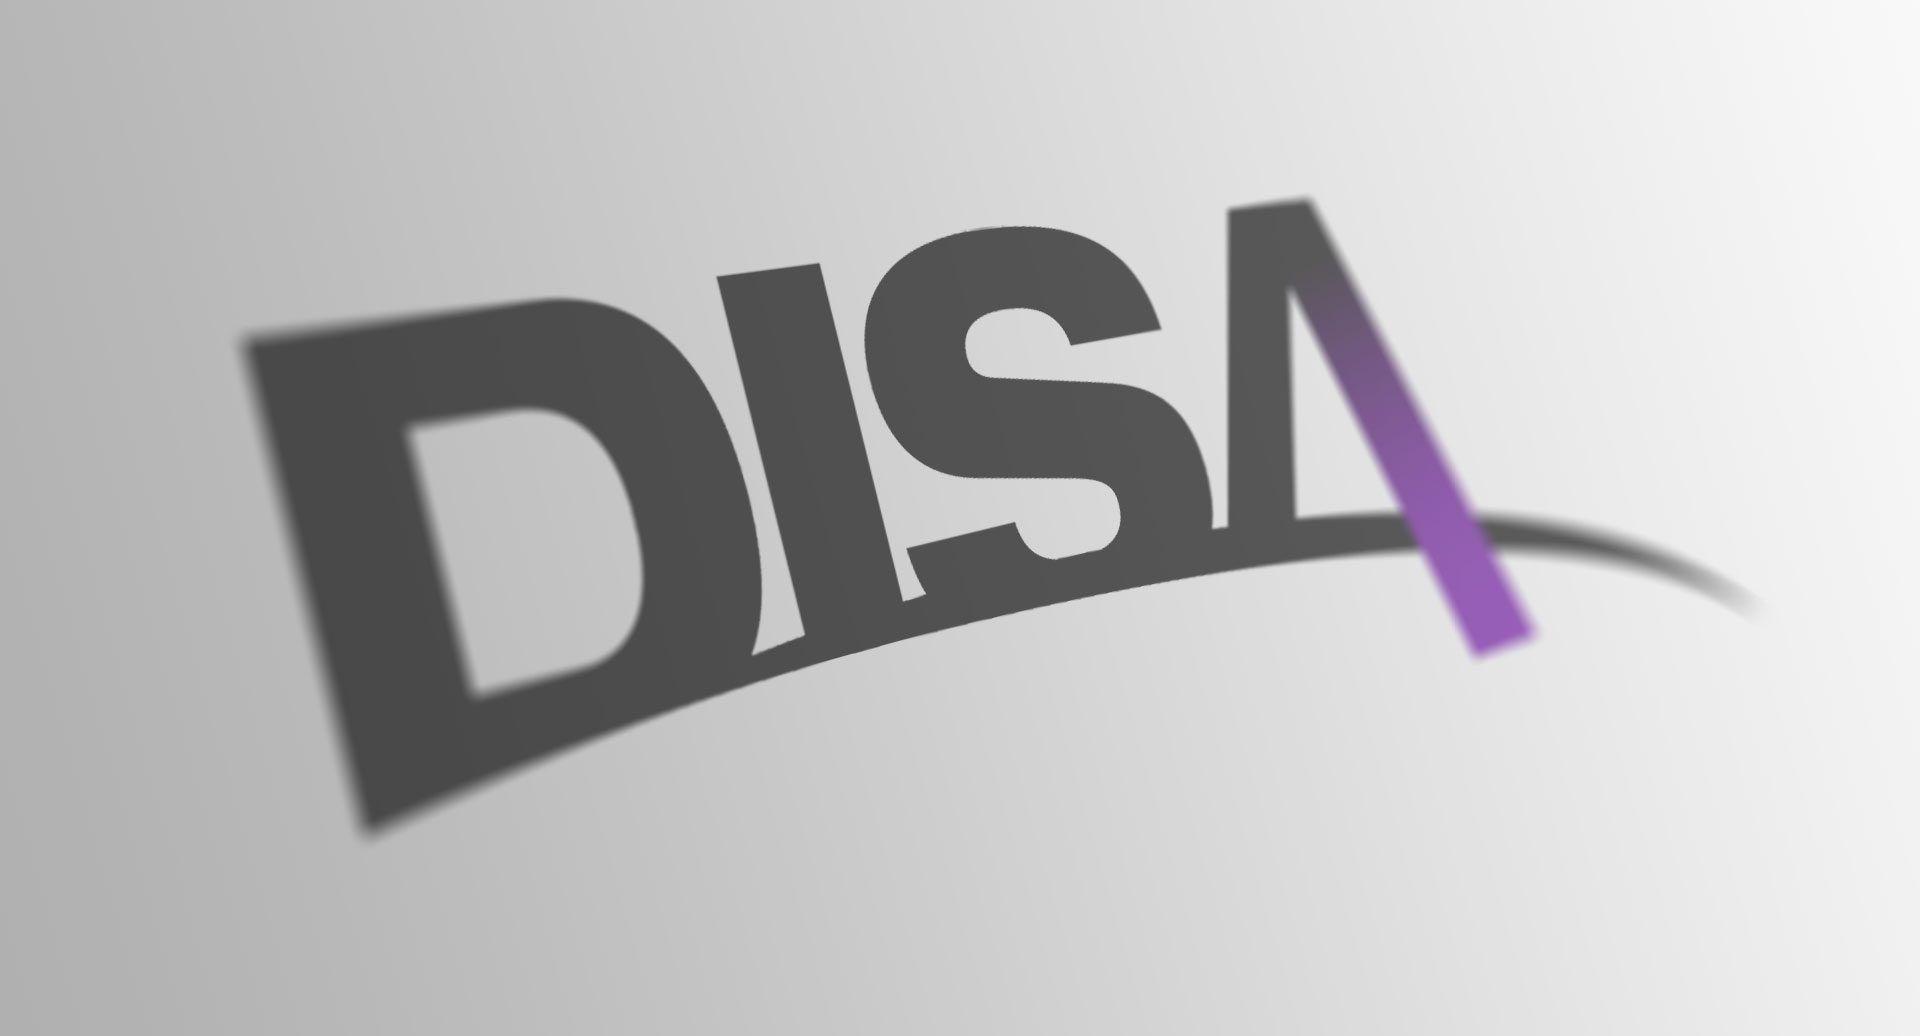 Disa Logo - Defense Information Systems Agency (DISA) Data Center